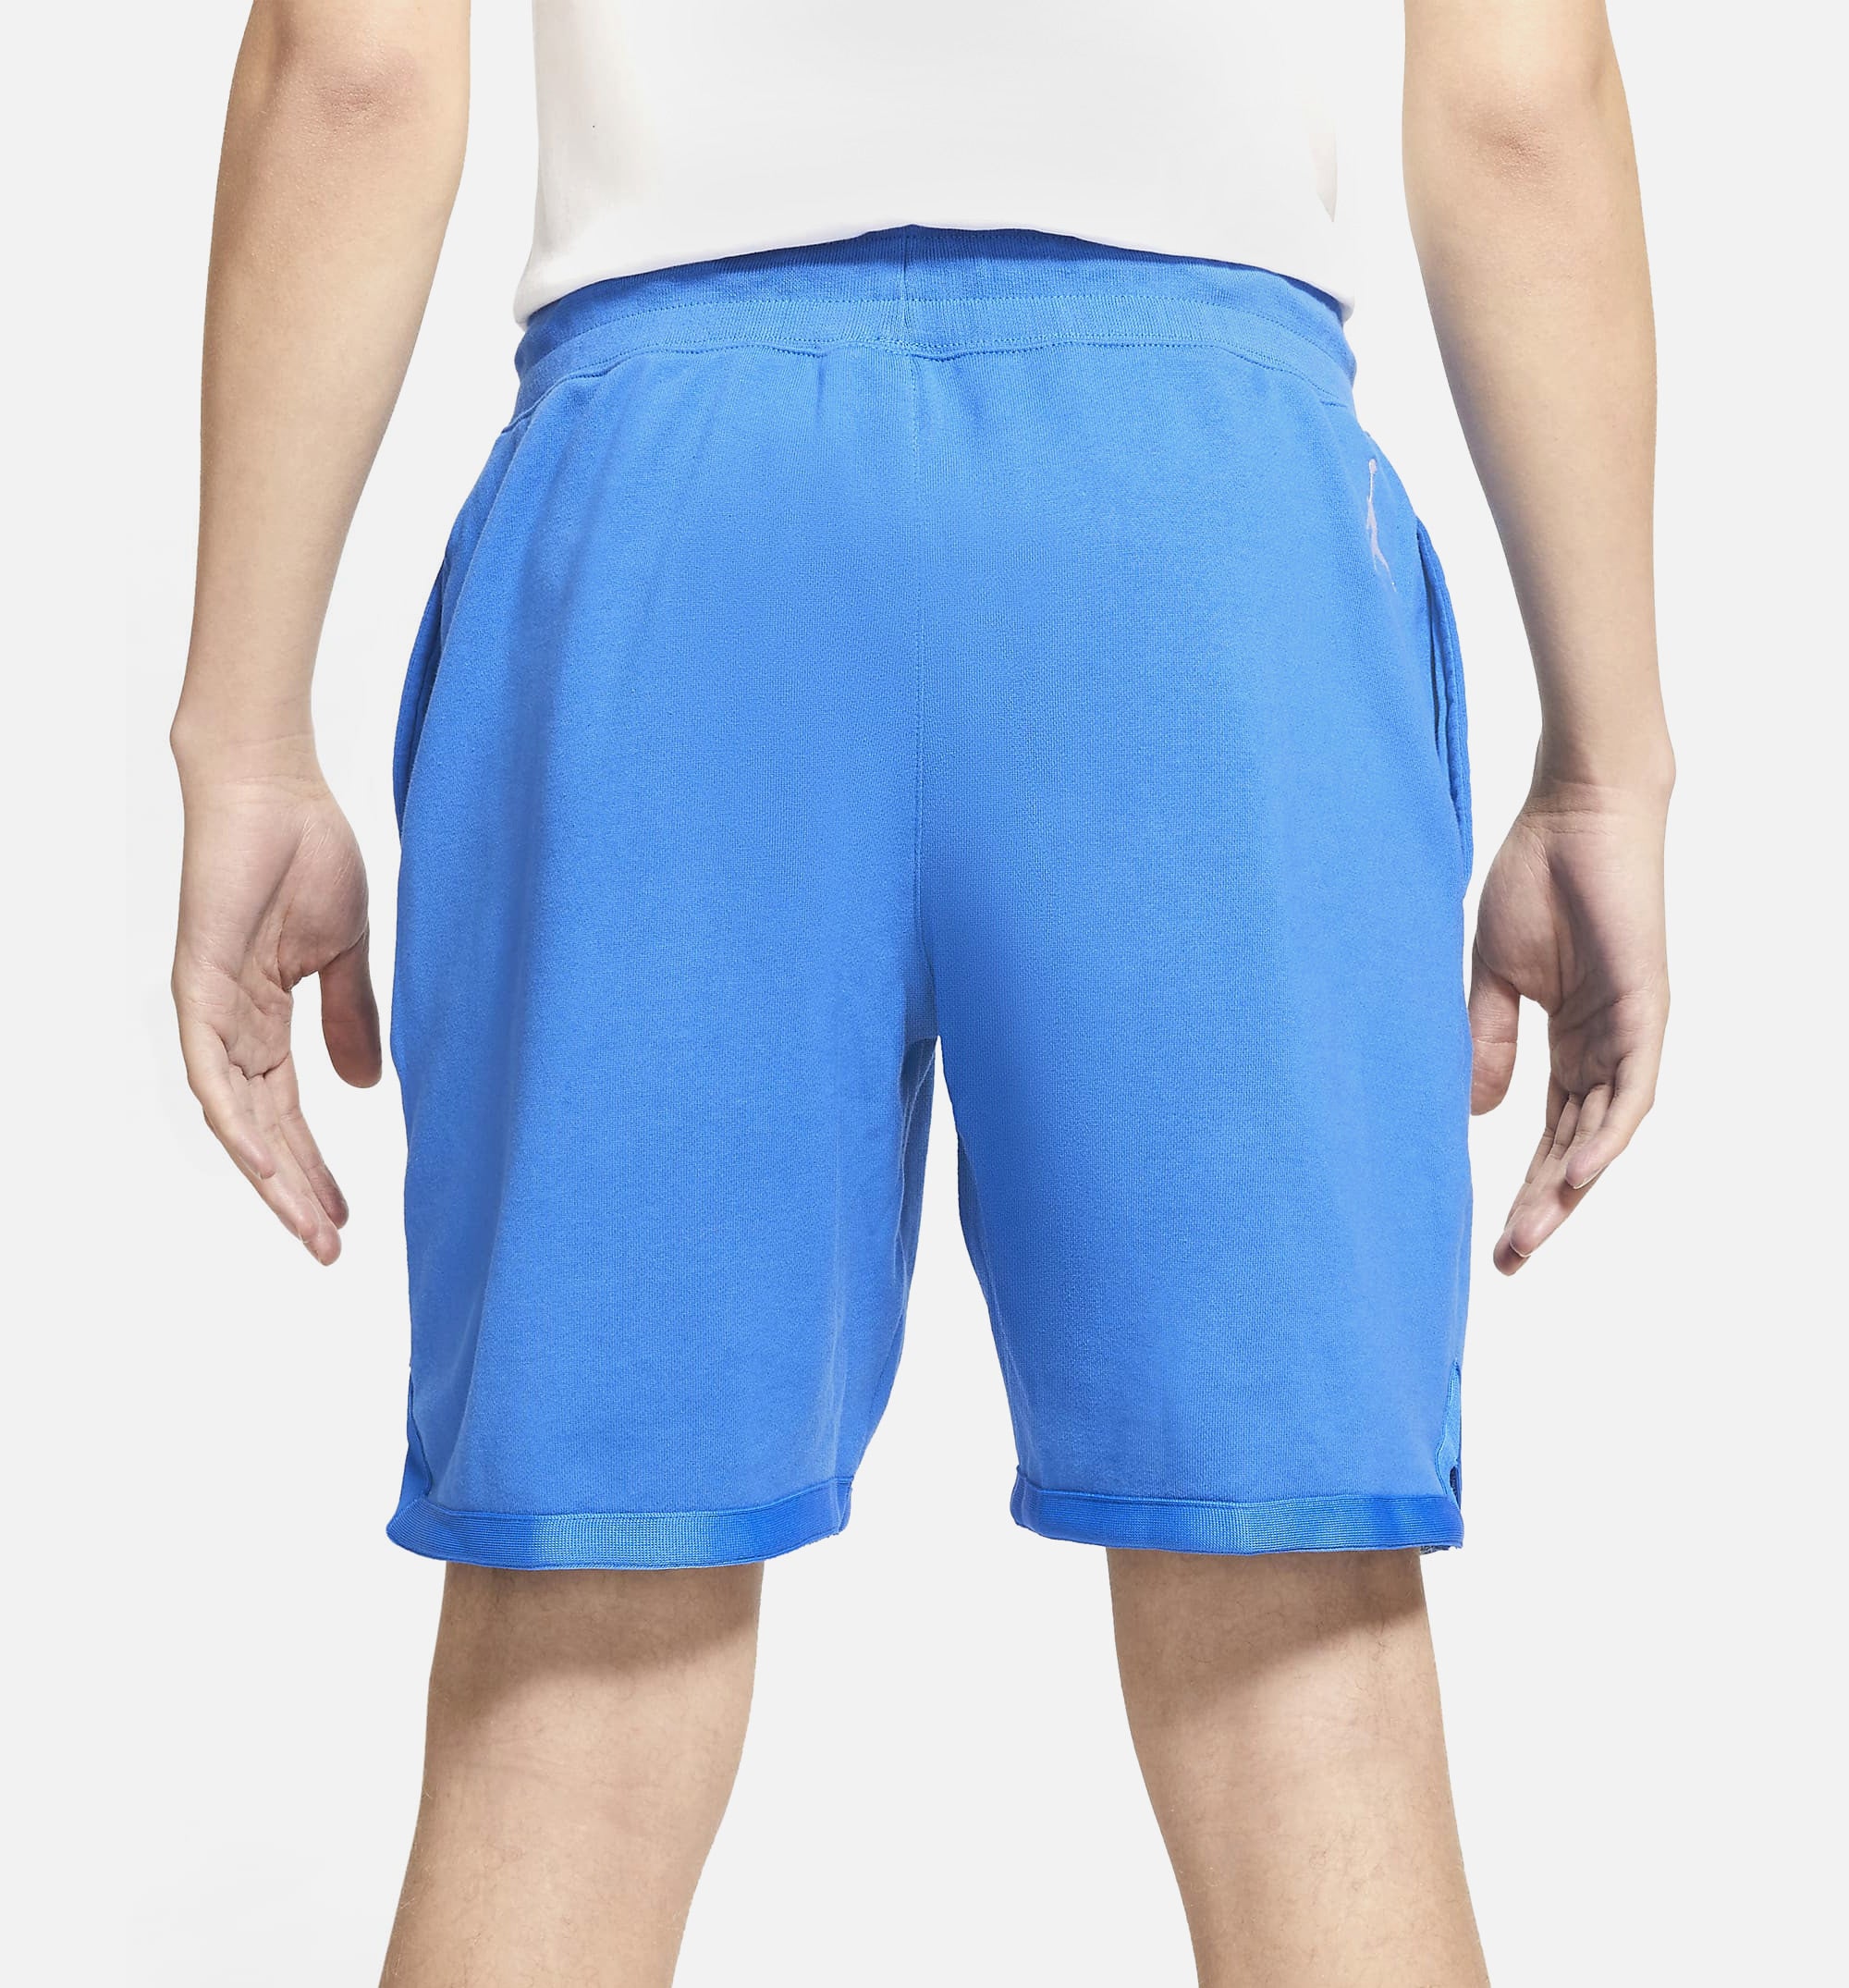 Jordan Jumpman Men's Basketball Shorts Navy Blue/Red/White 404309